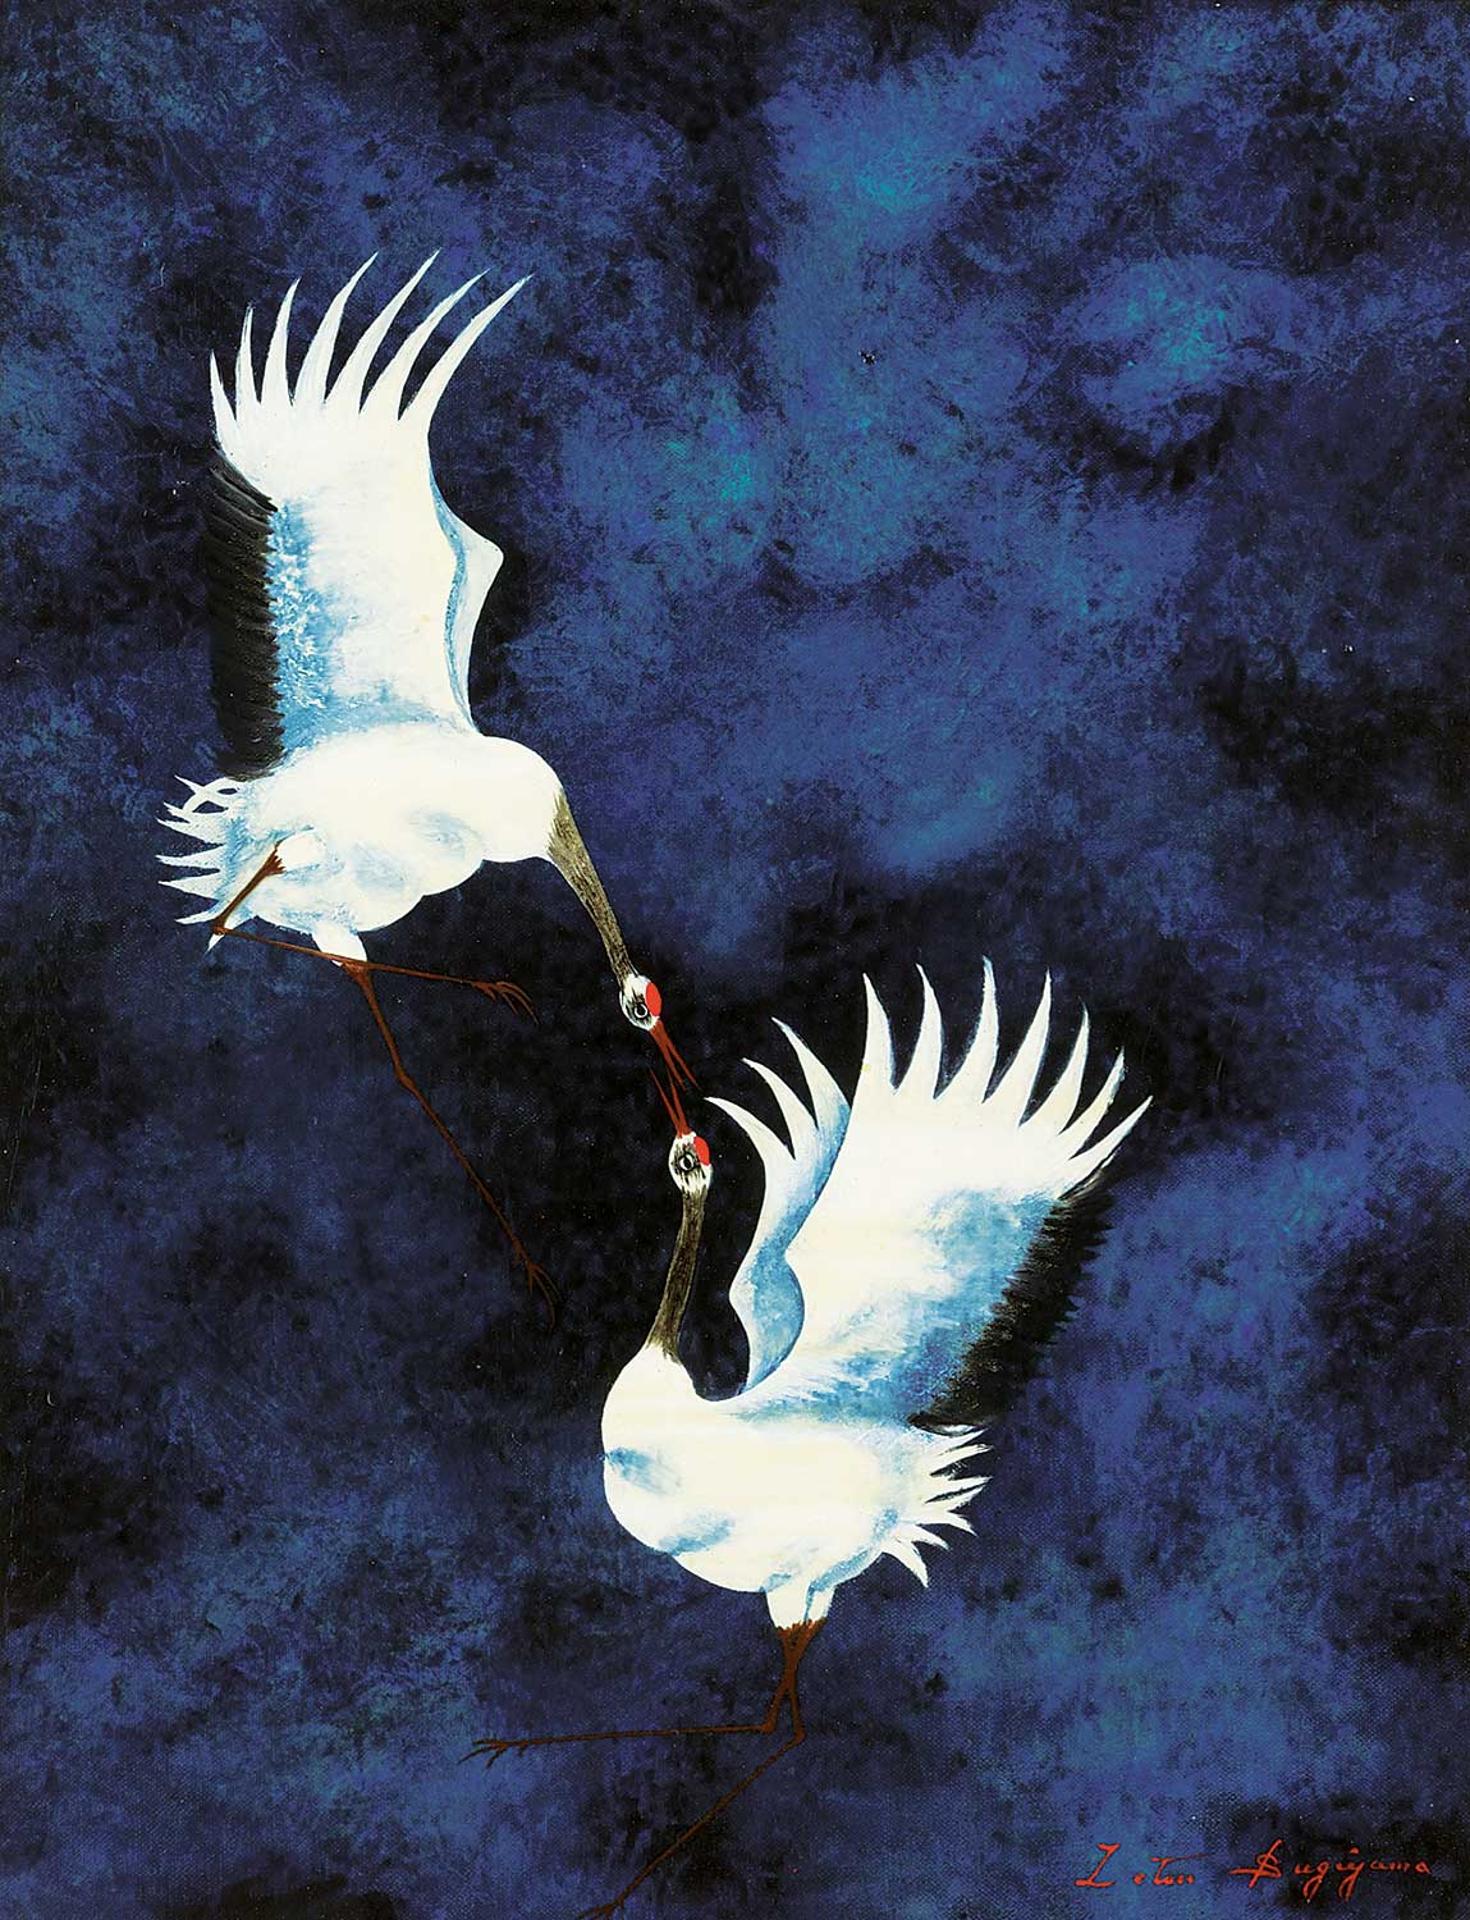 Letsu Sugiyama - Untitled - Two Cranes